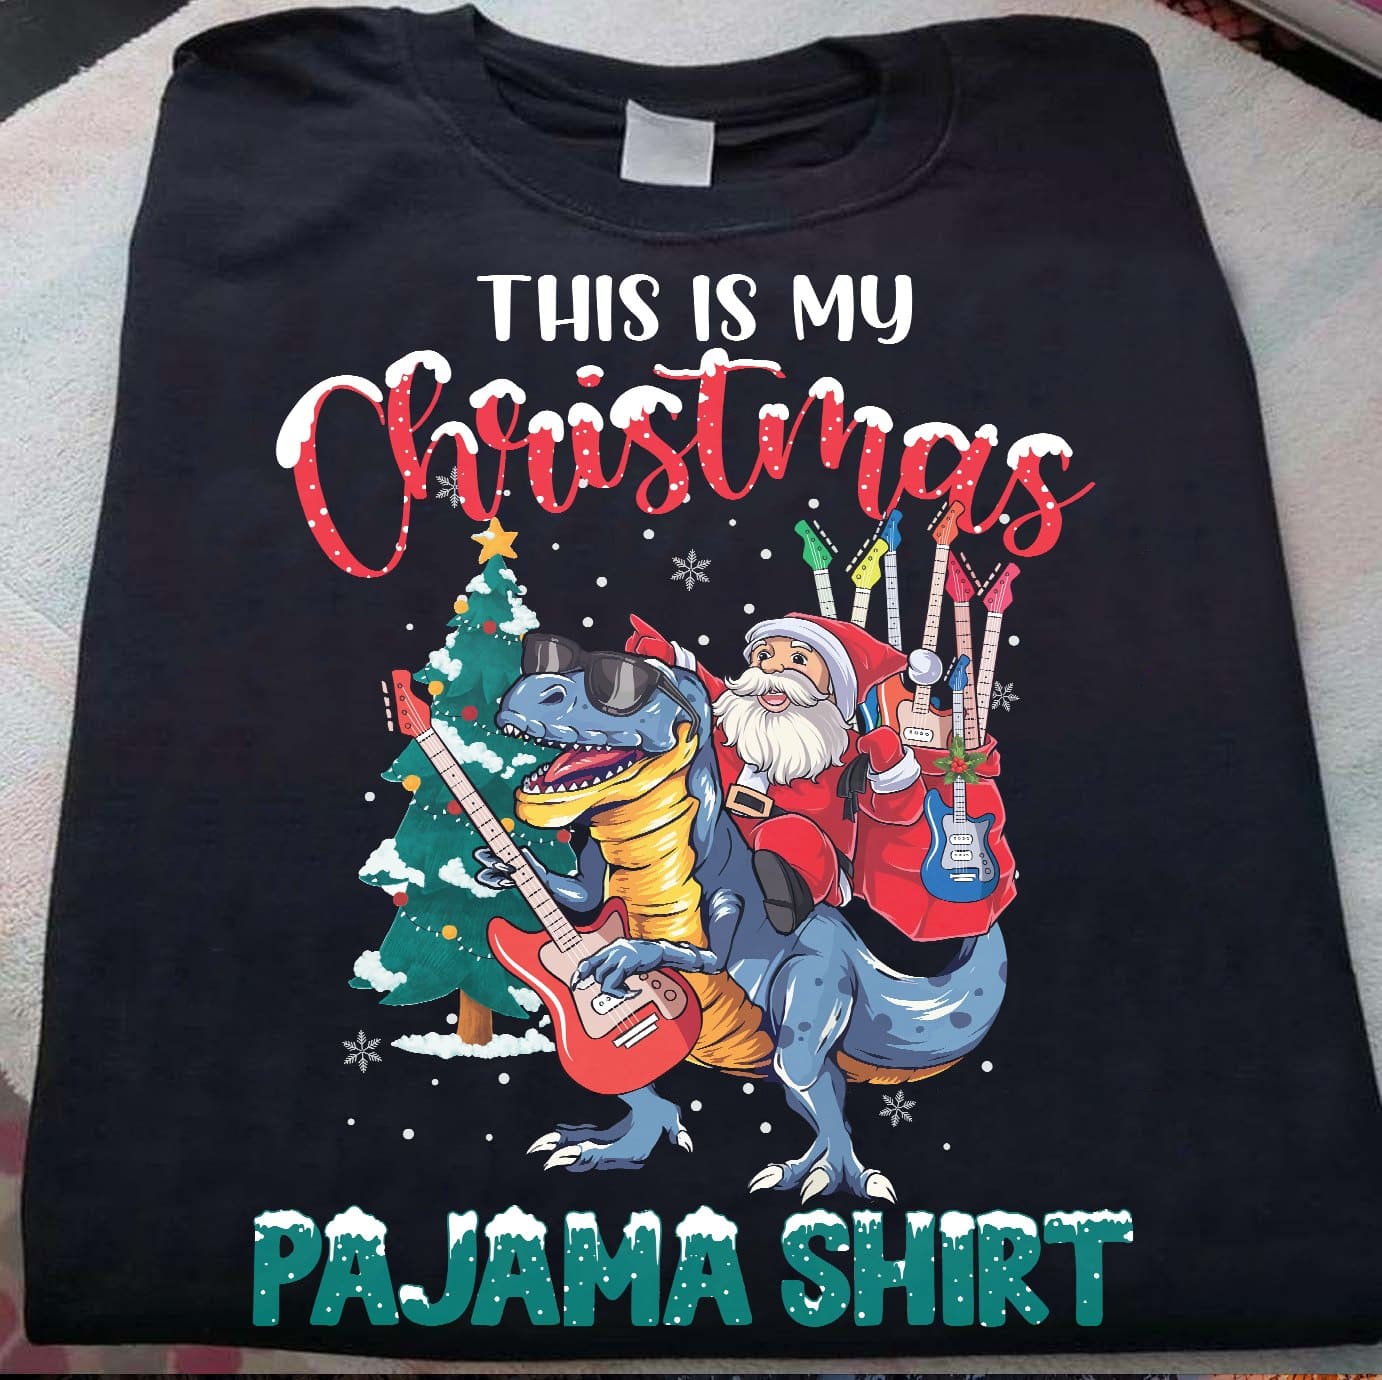 This is my Christmas pajama shirt - Santa Claus riding dinosaur, Christmas gift for guitarists